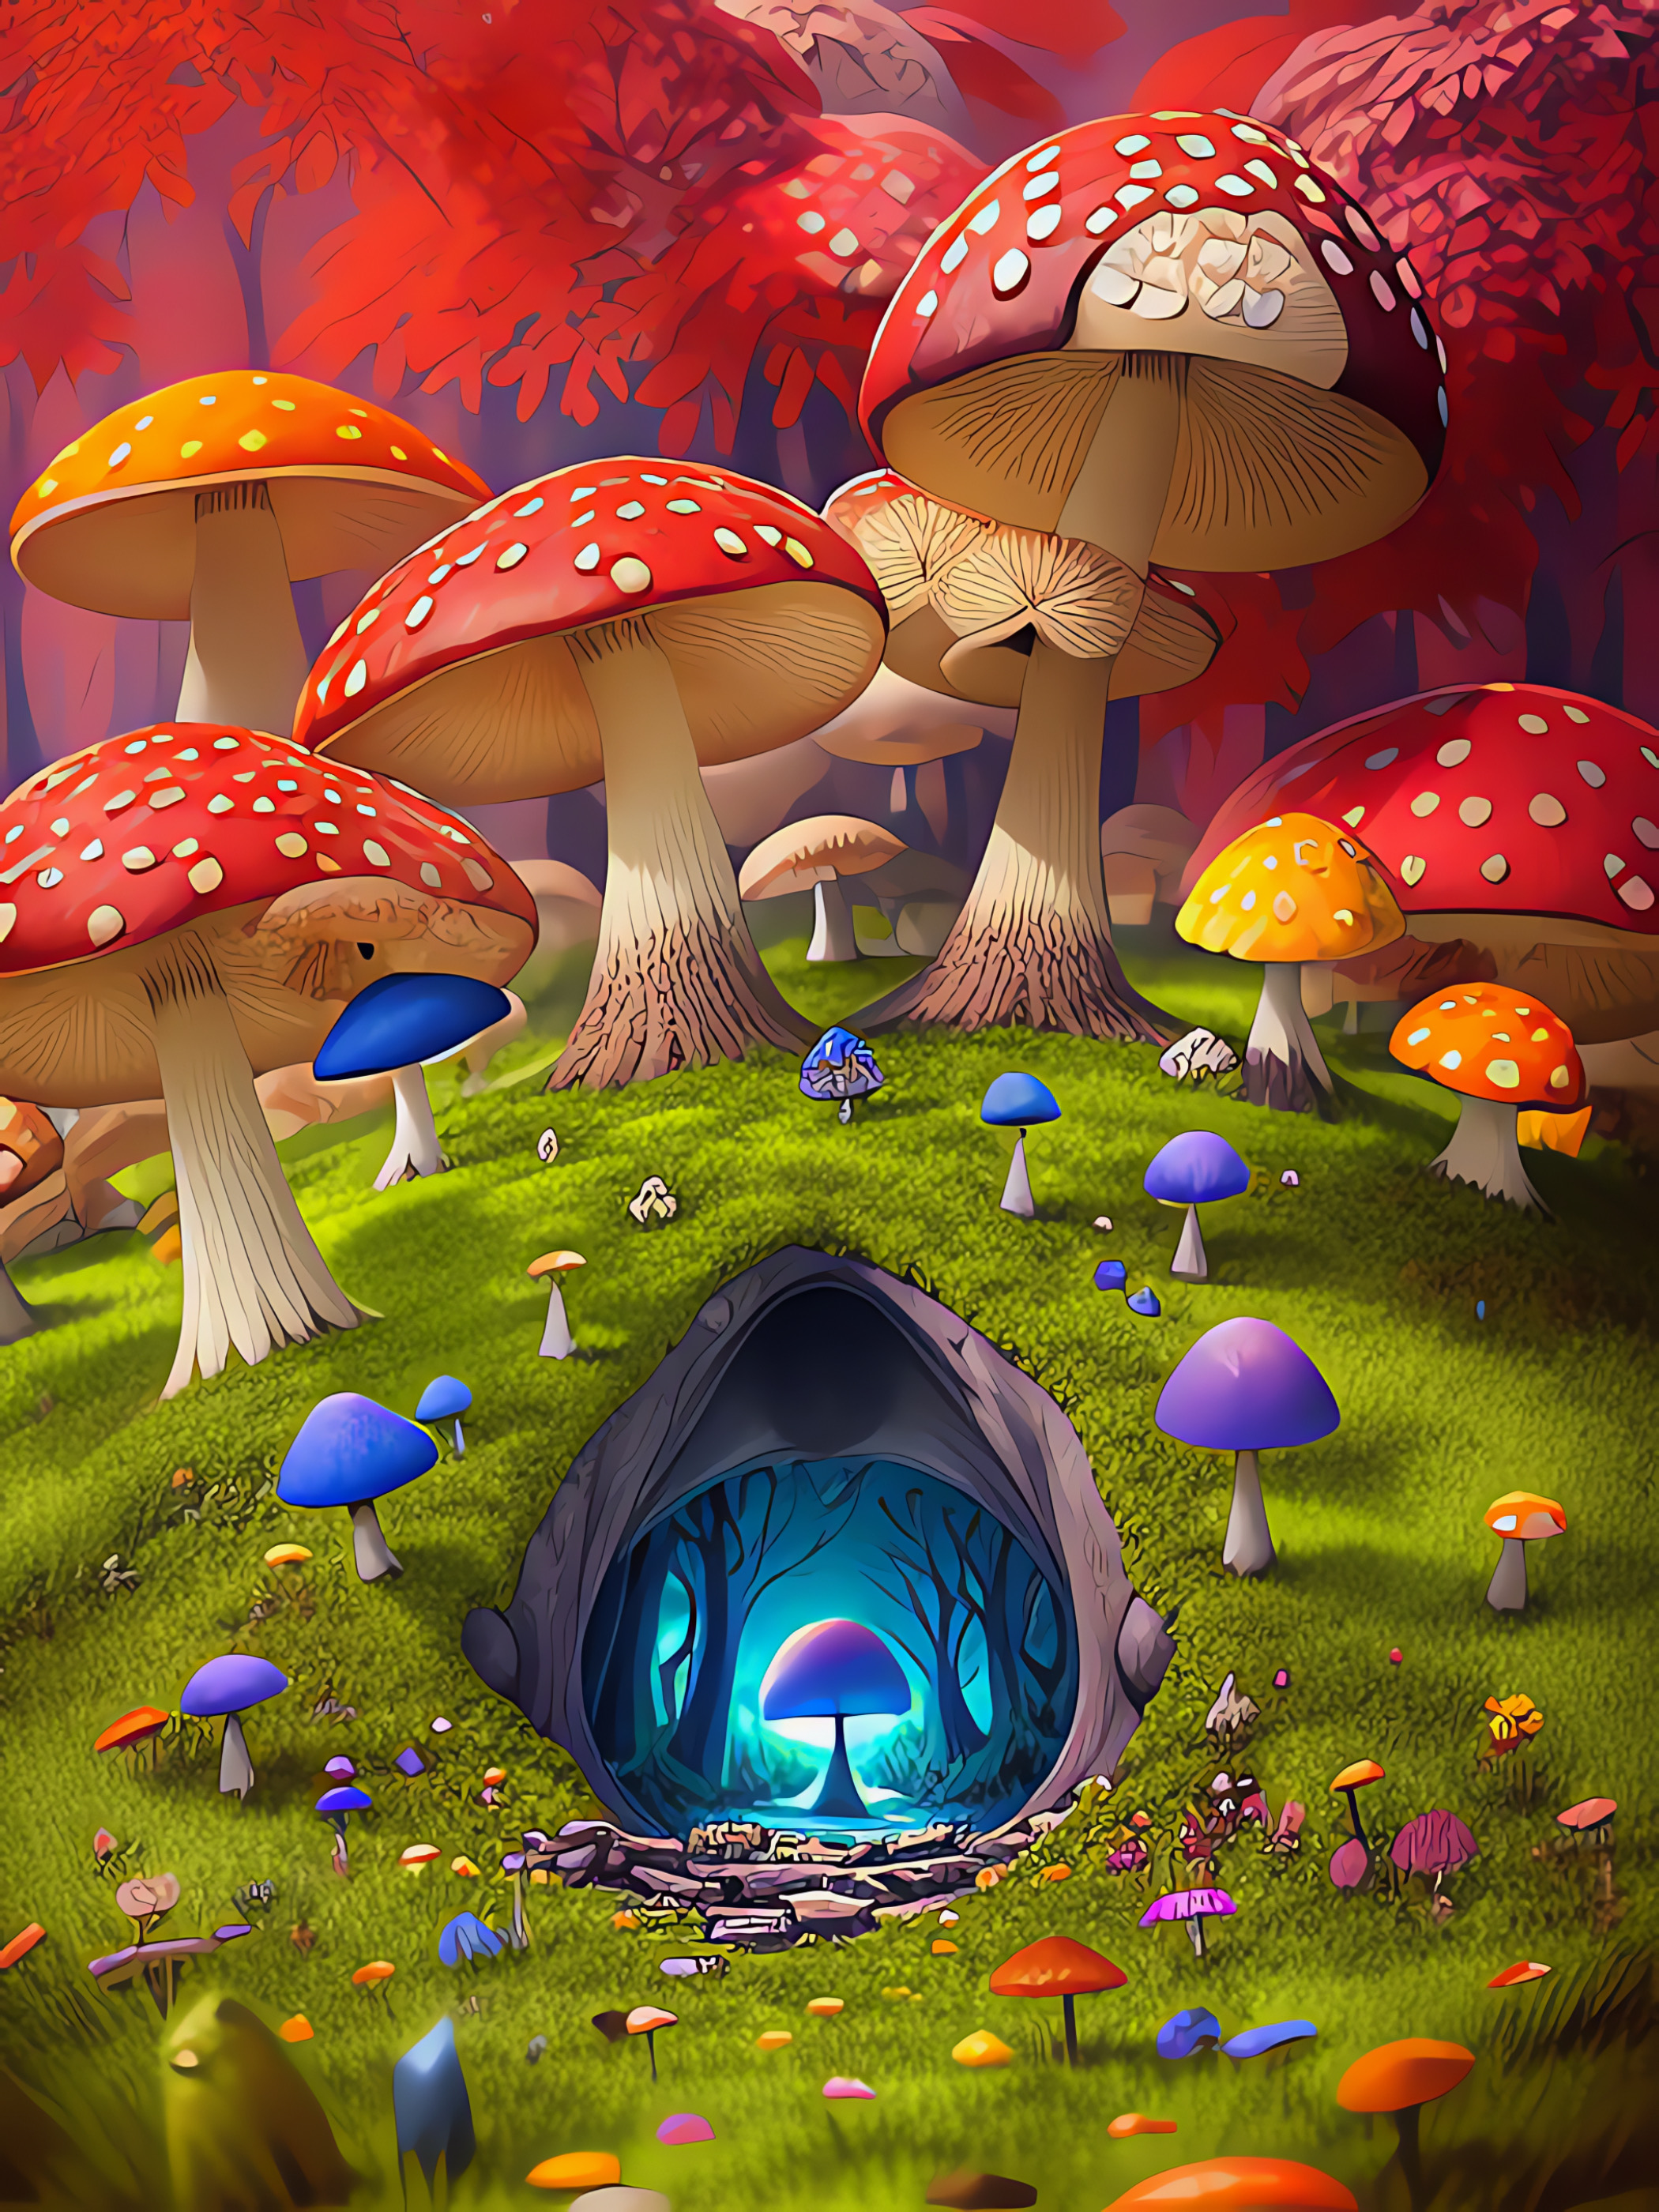 Mandelbrot Mushroom Kingdom: Into the Earth